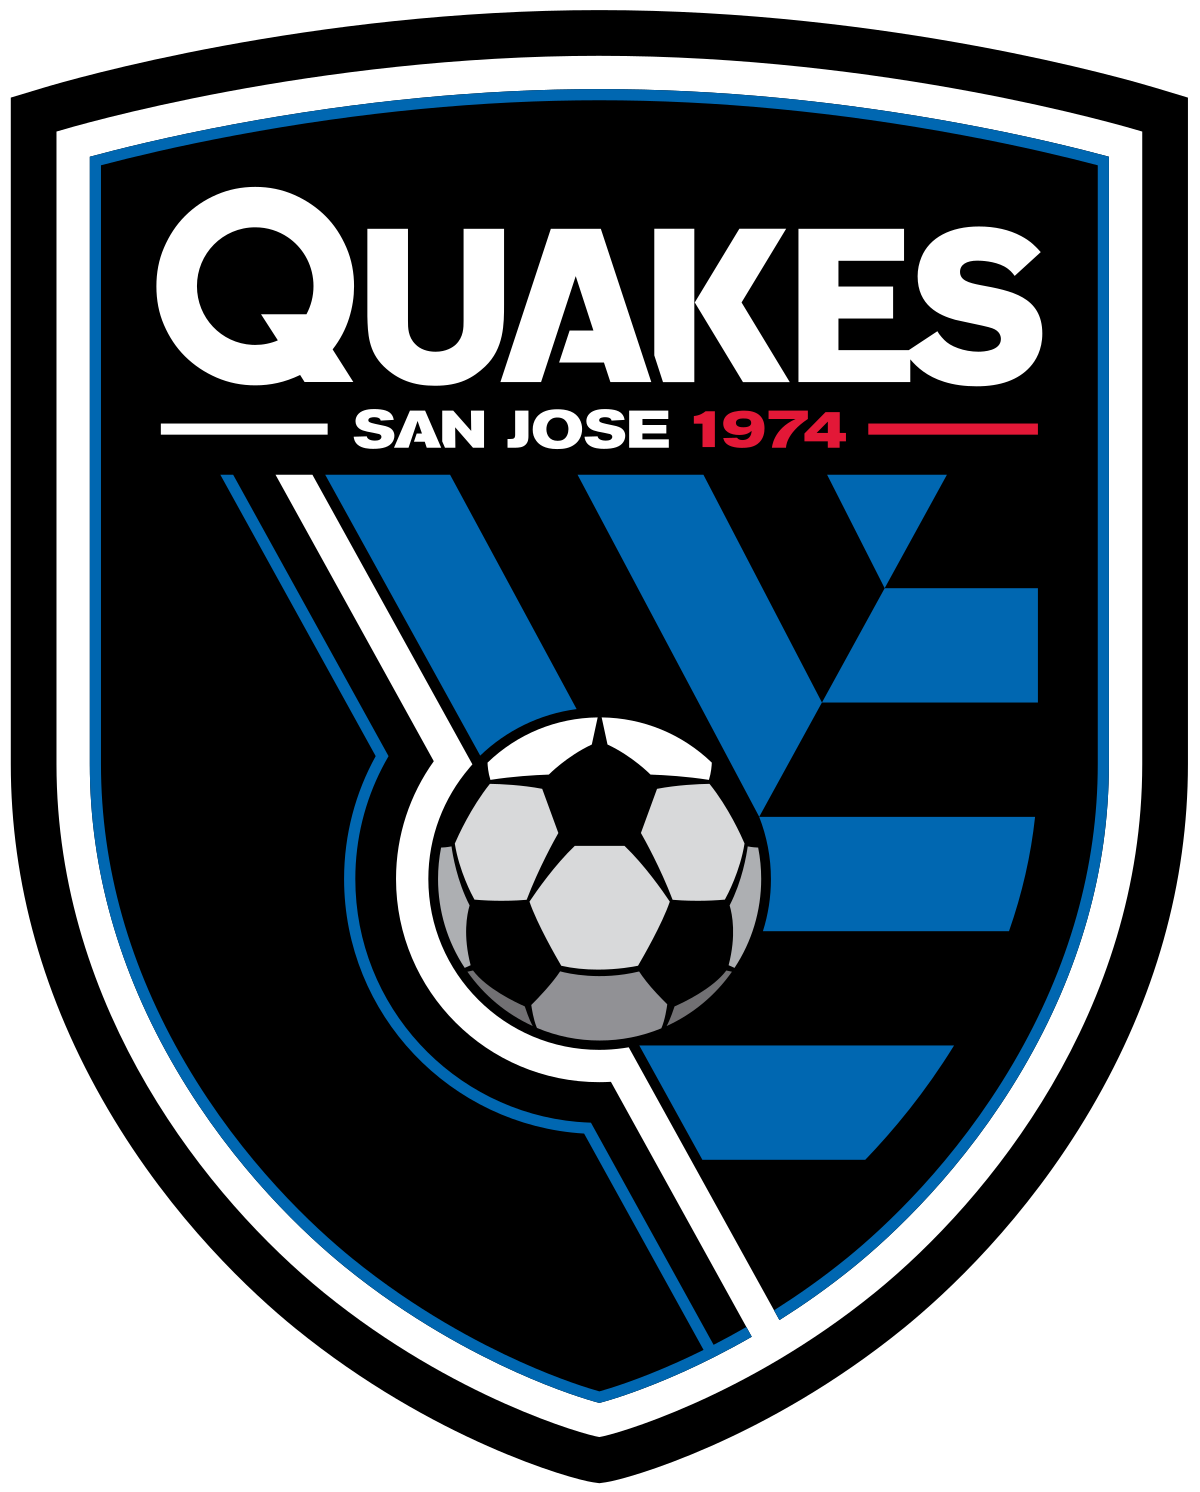 San Jose Earthquakes - Wikipedia